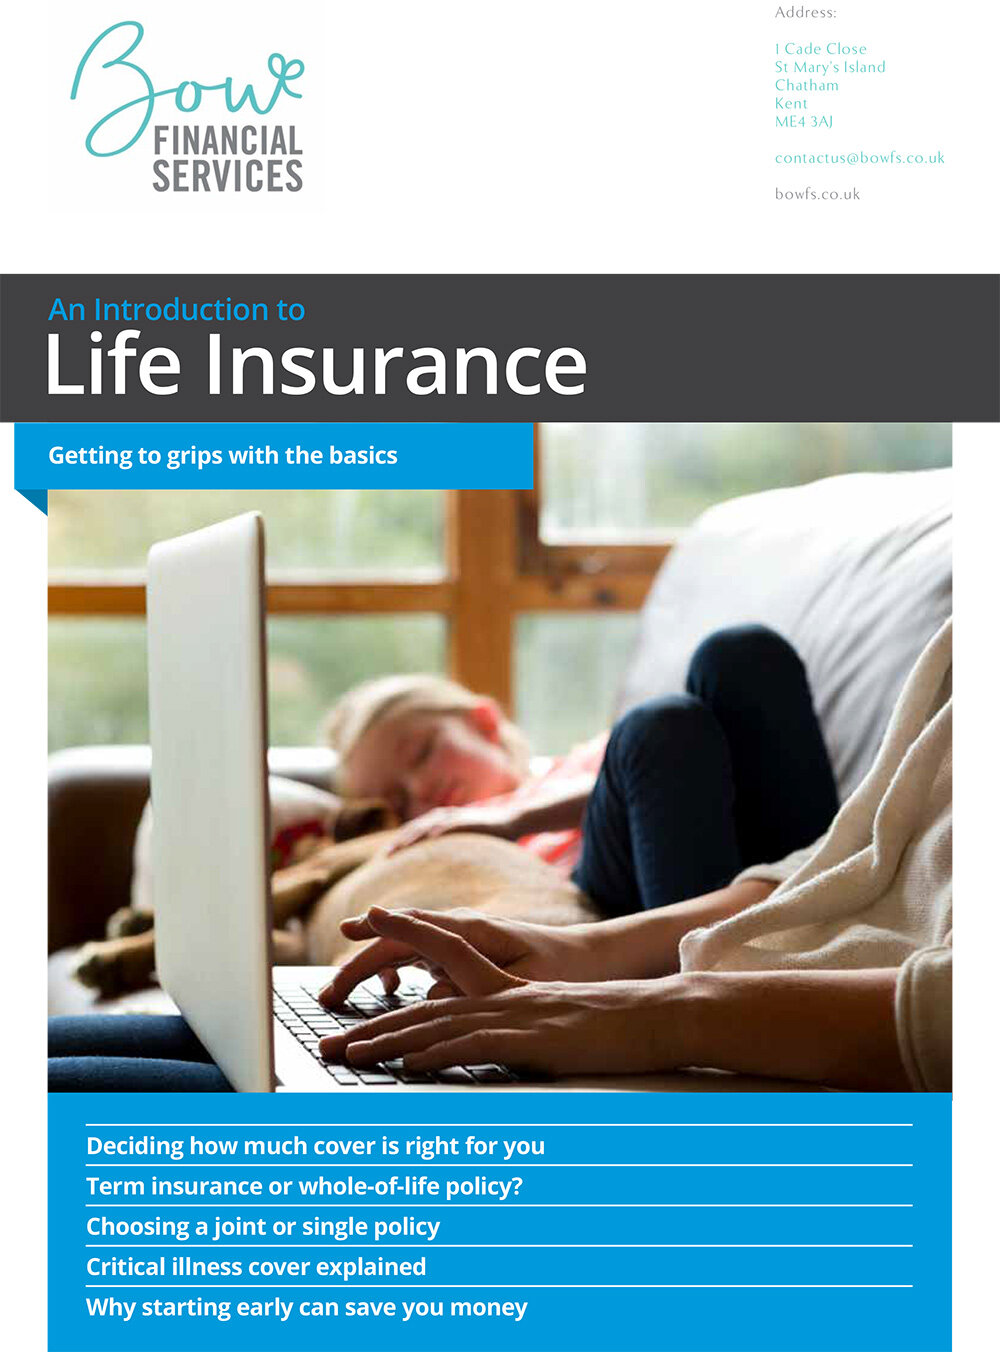 An-Introduction-to-Life-Insurance---January-2020-2.jpg